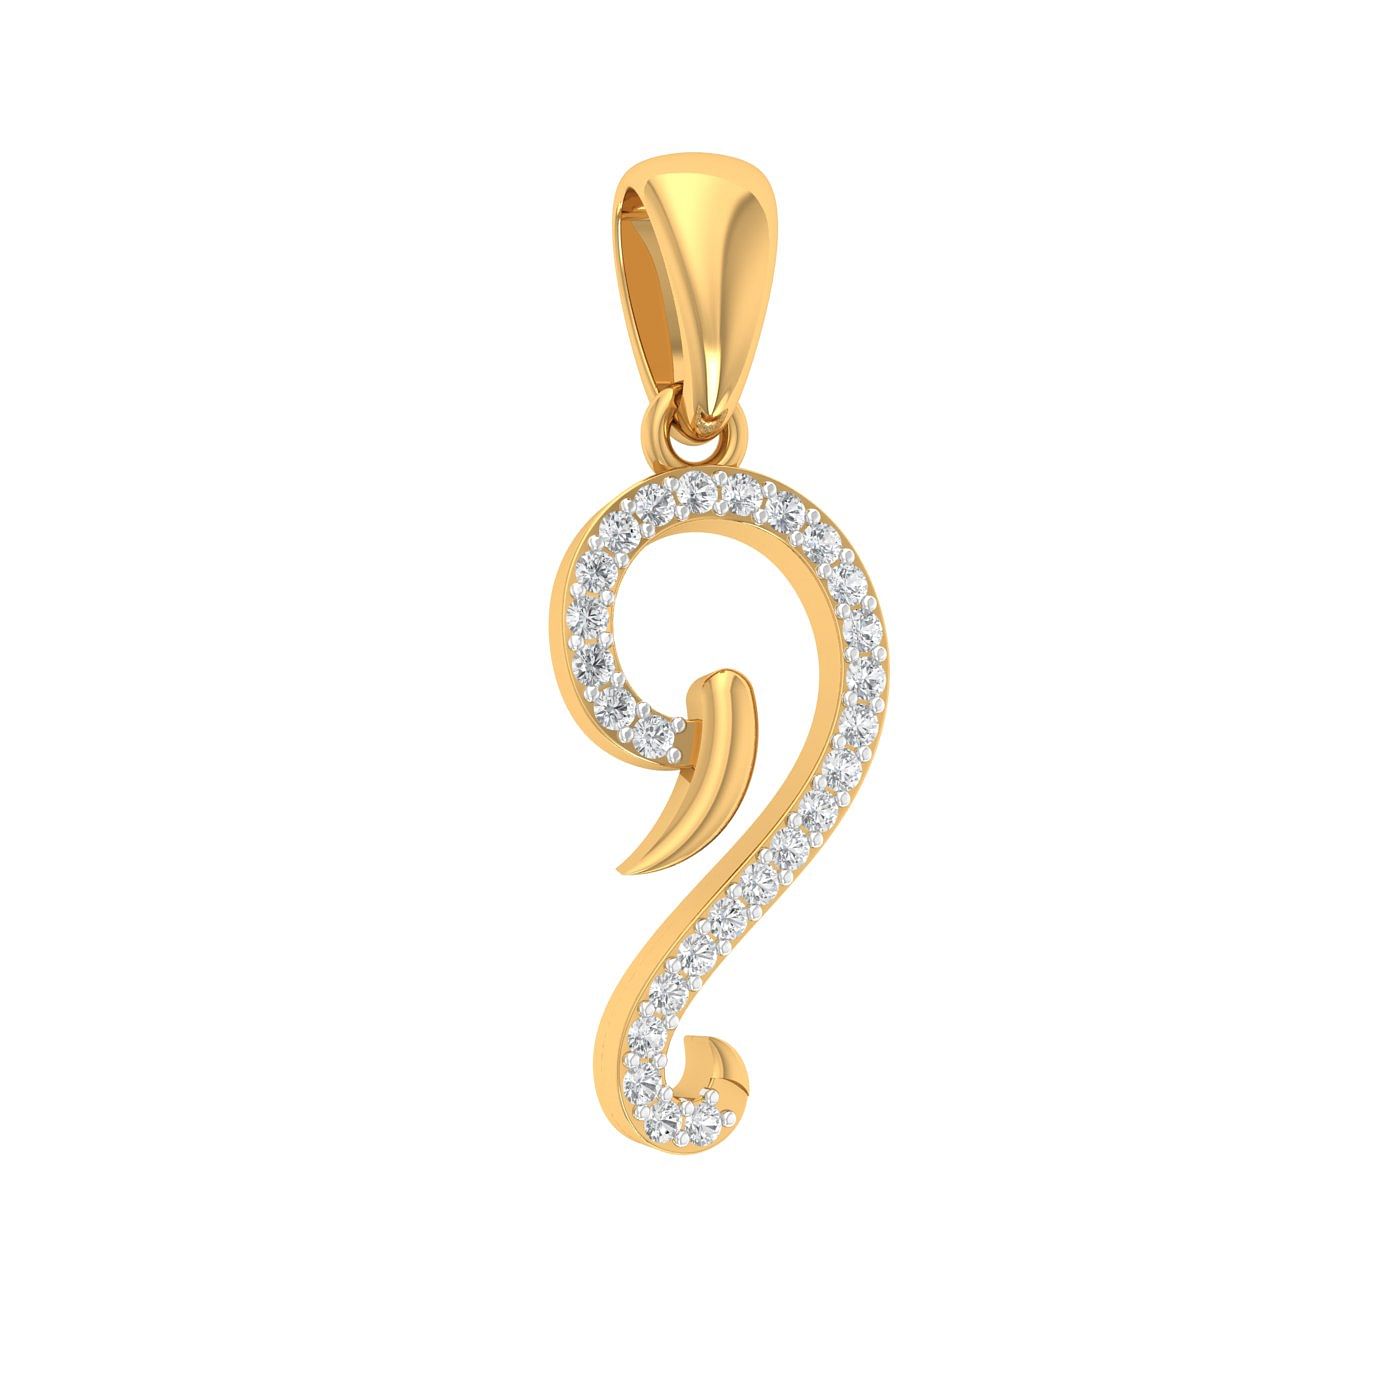 Ganesh rakhsa diamond pendant in yellow gold